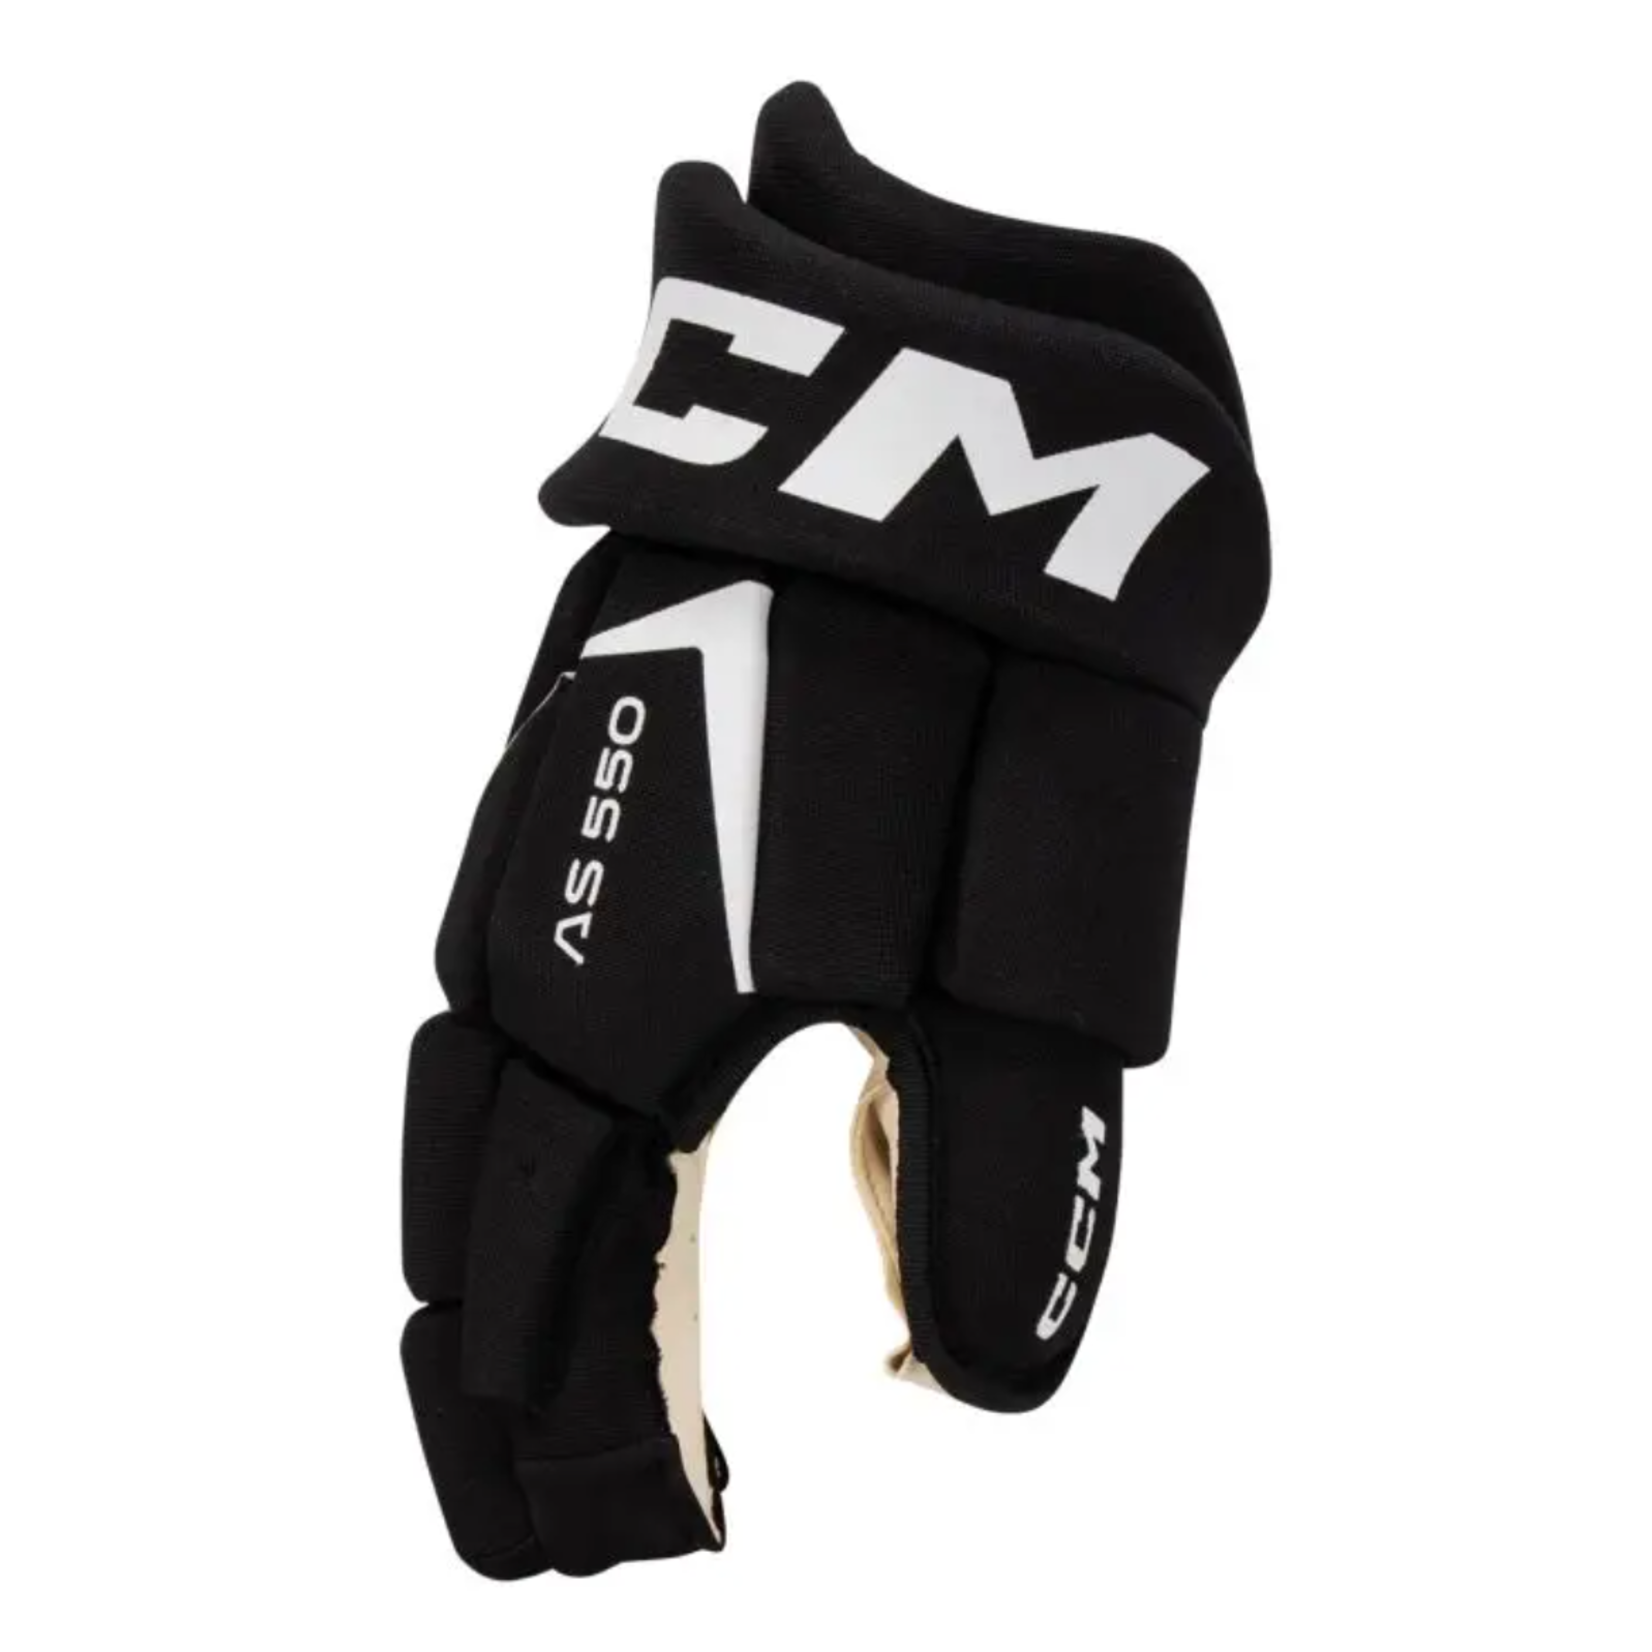 CCM Hockey CCM Tacks AS550 Youth Gloves